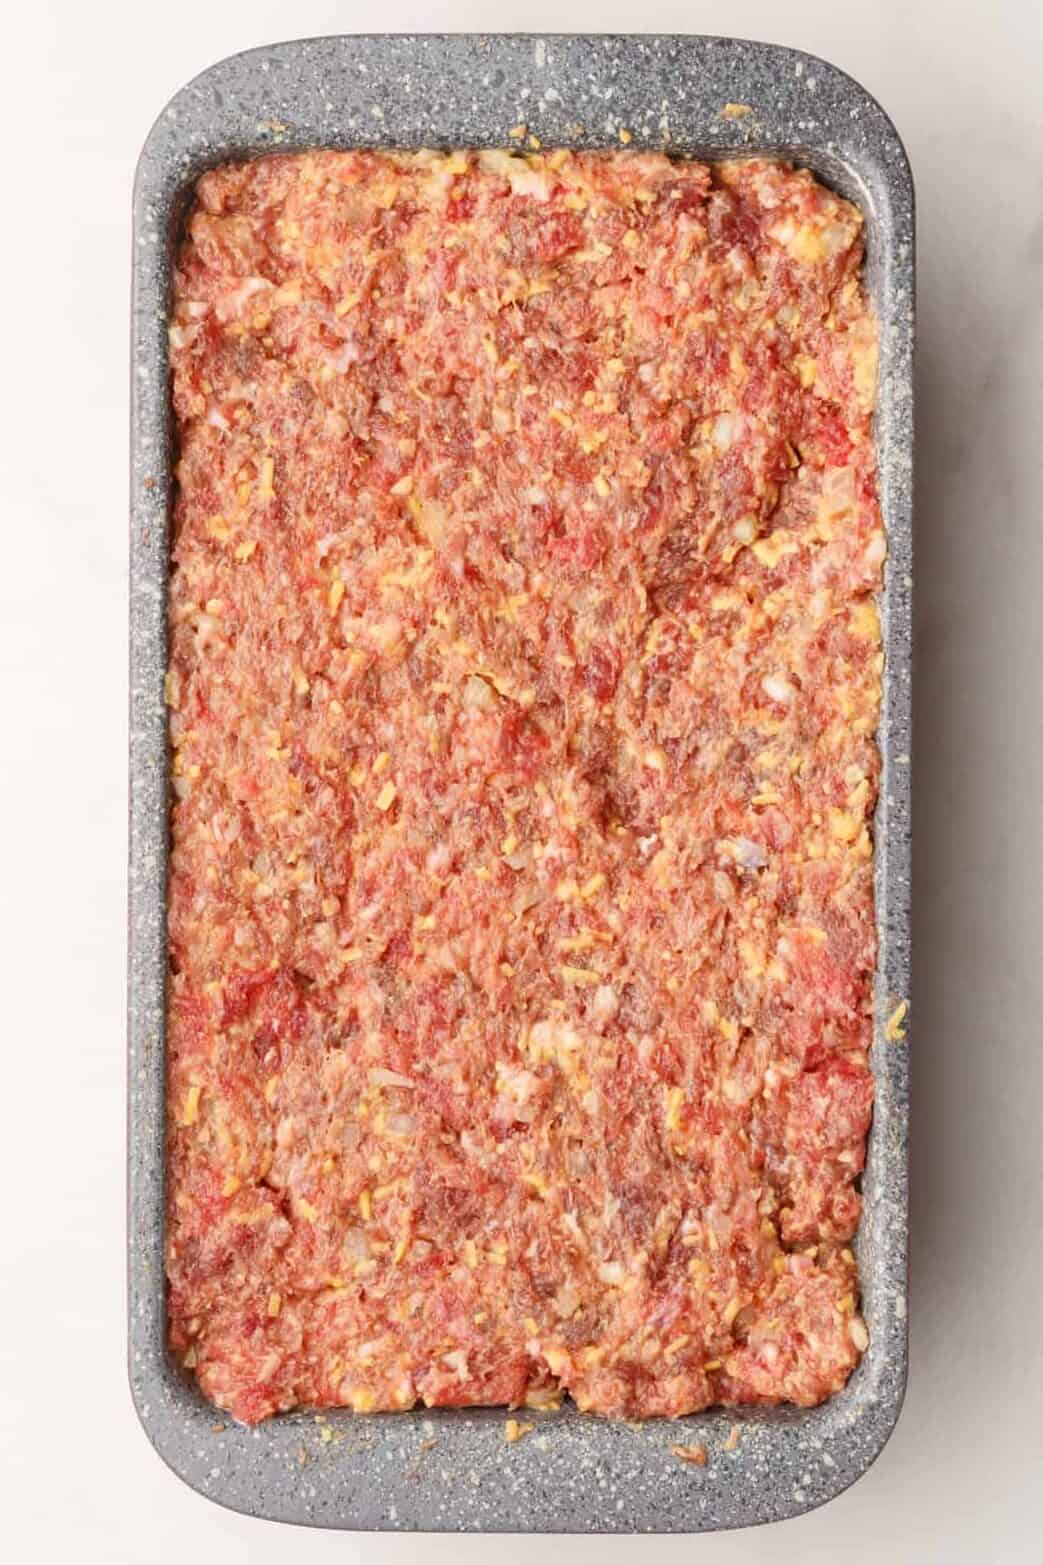 9x4 inch baking loaf pan with prepared cracker barrel meatloaf mixture.